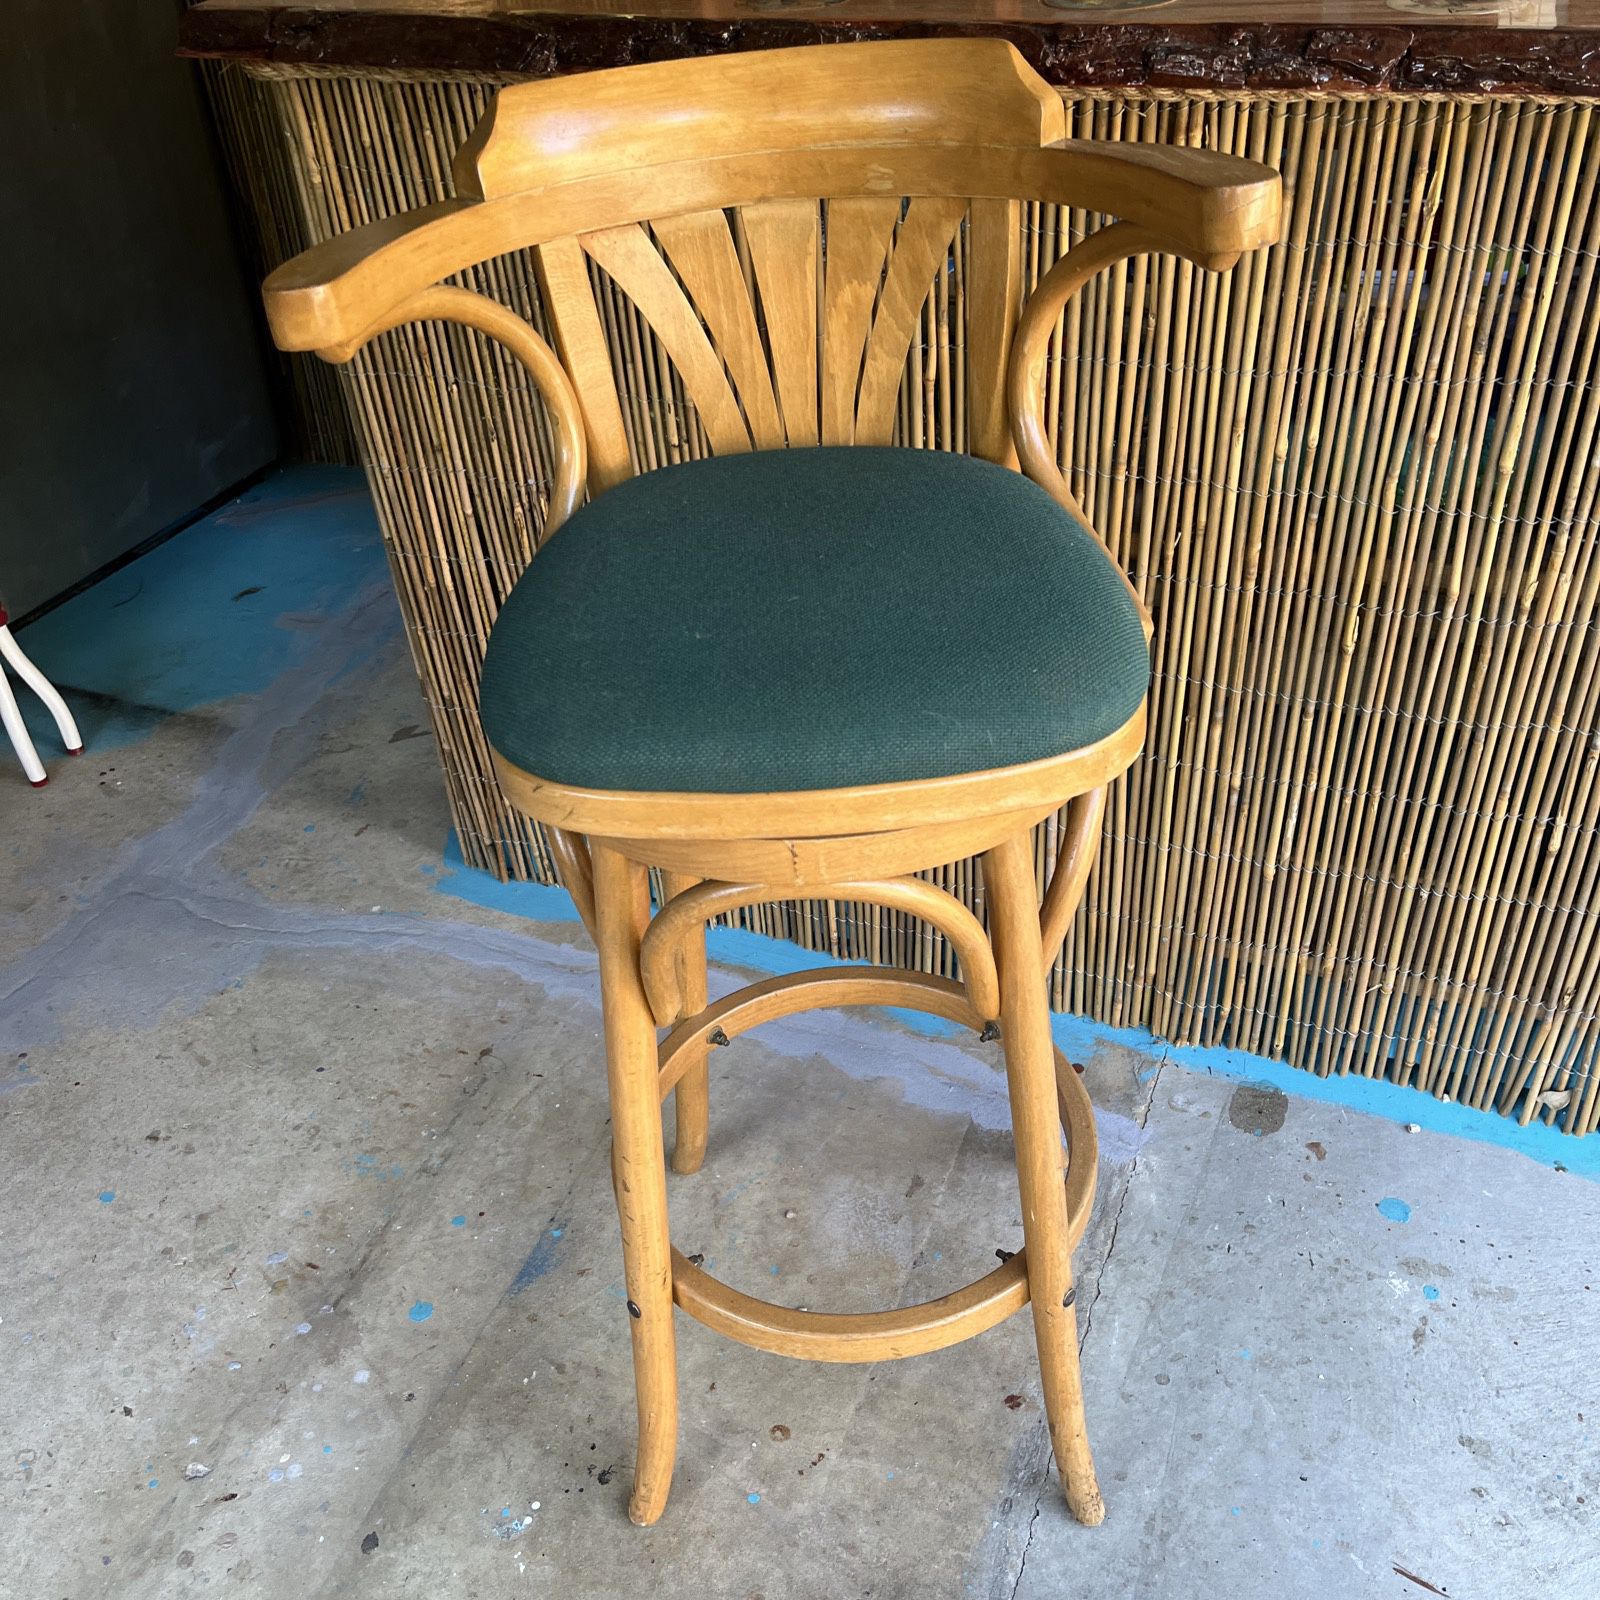  Vintage Wooden Swivel Bar Stool Chair